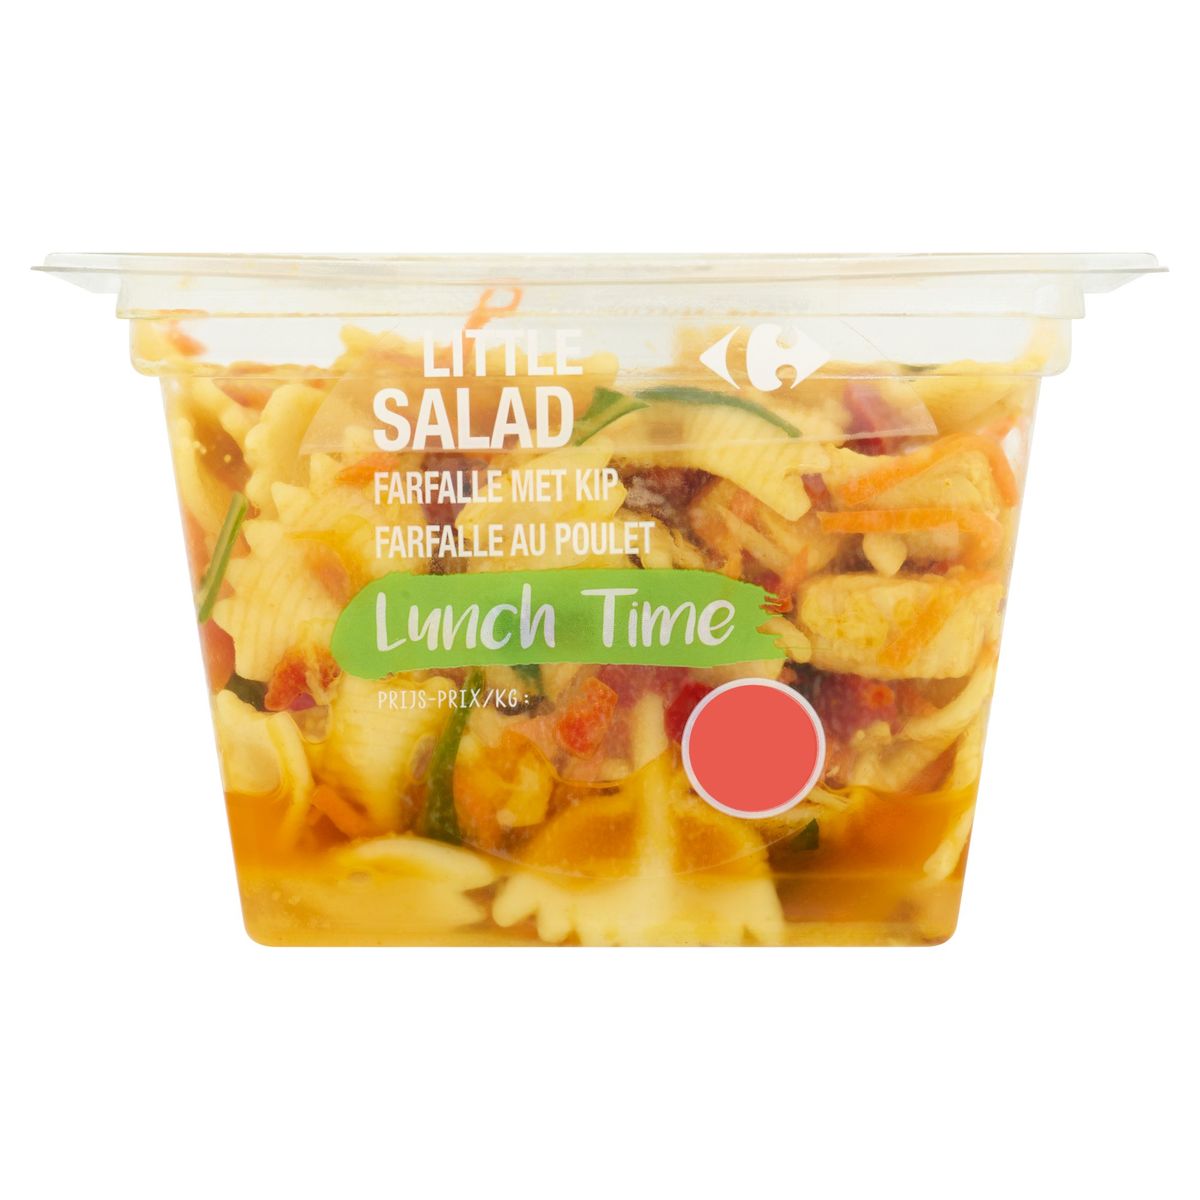 Carrefour Lunch Time Little Salad Farfalle met Kip 250 g